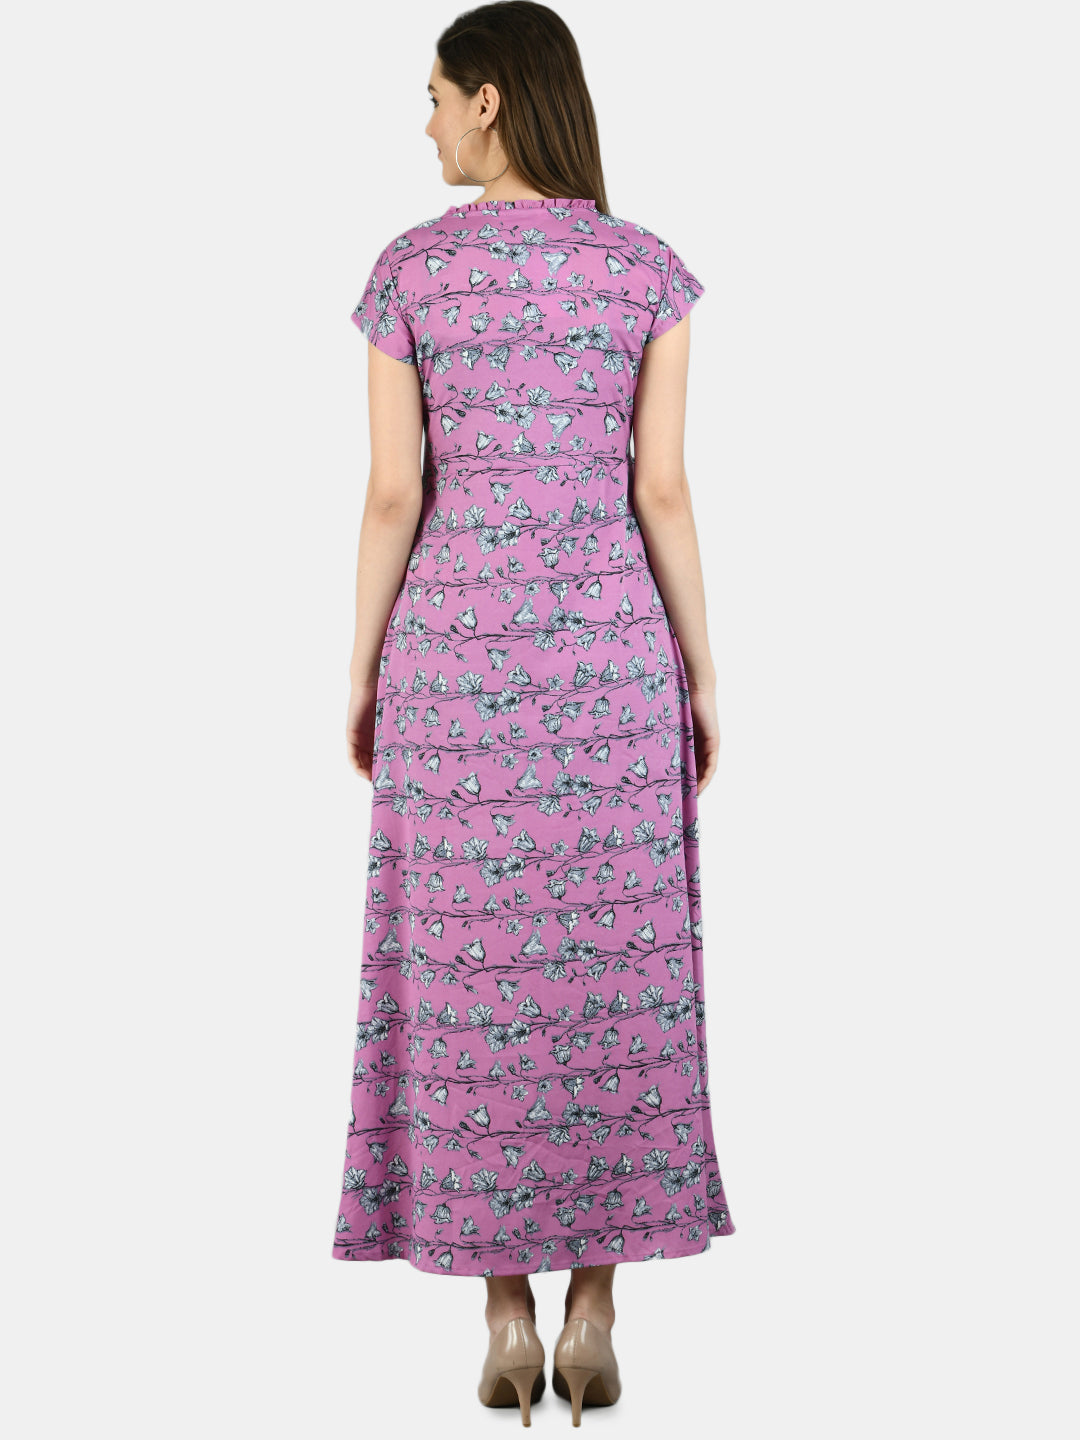 Myshka Women's Purple Polyester Printed Short Sleeve V Neck Casual Dress